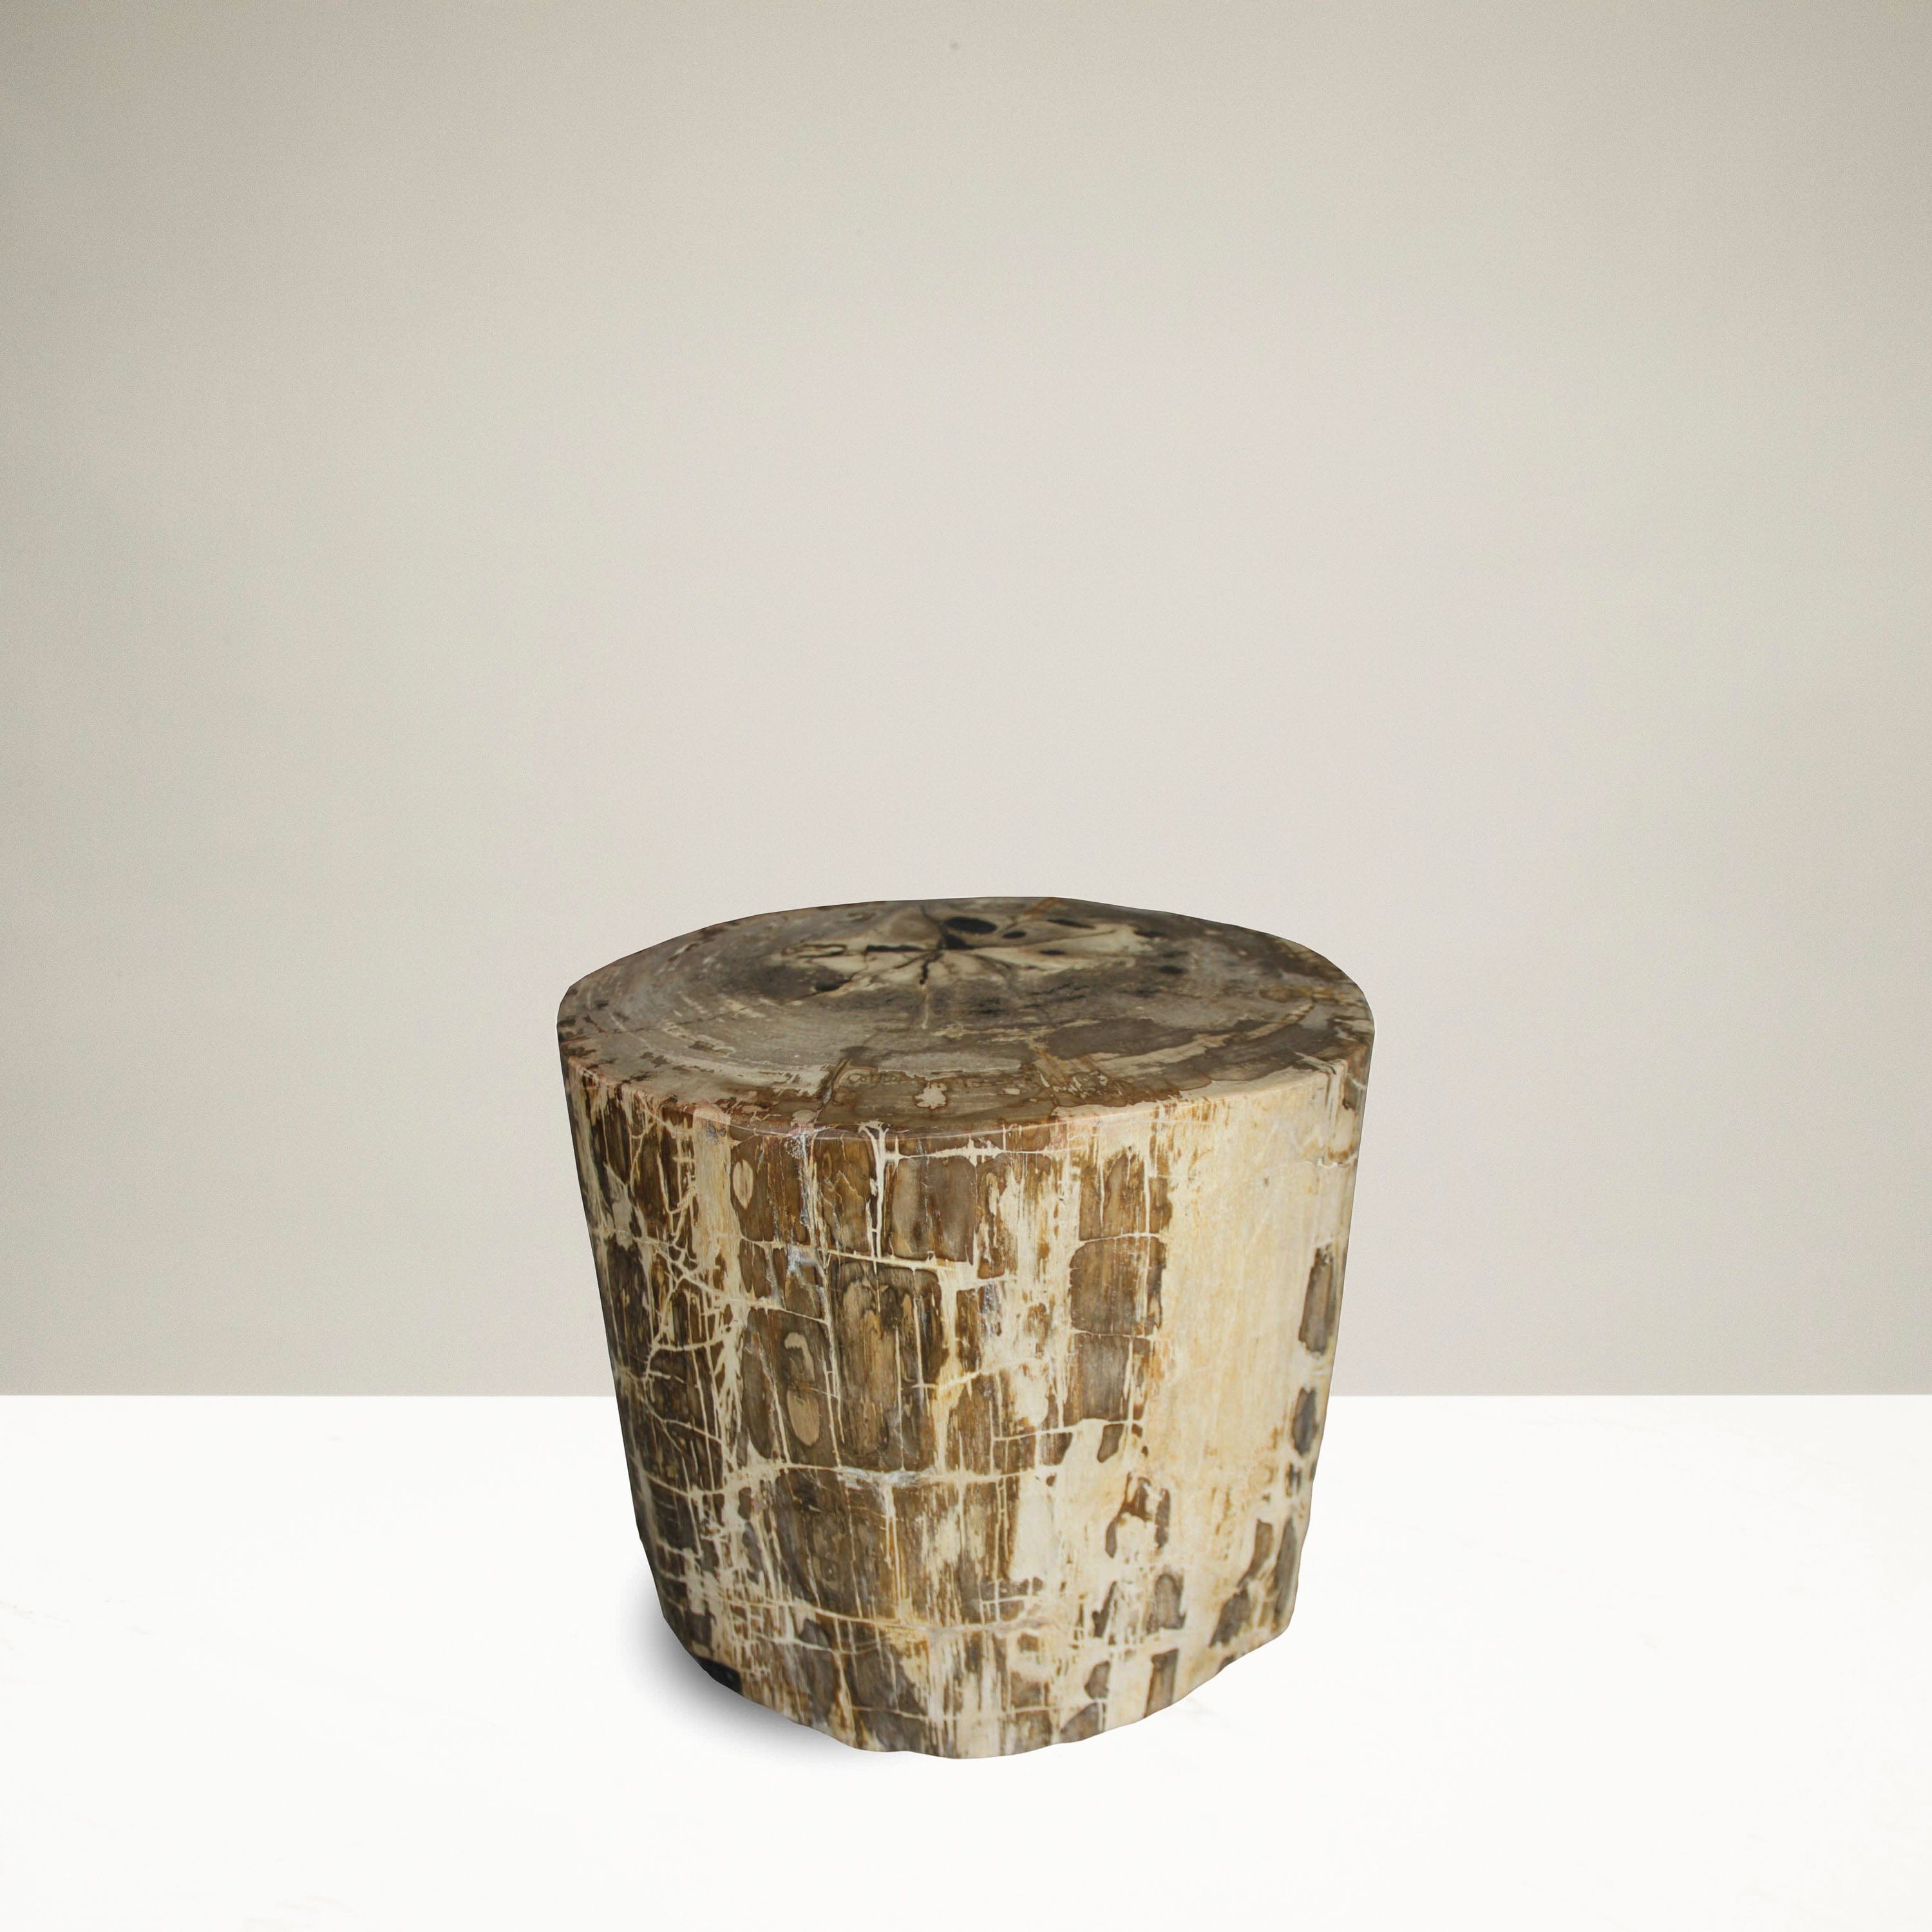 Kalifano Petrified Wood Petrified Wood Round Stump / Stool from Indonesia - 16" / 266 lbs PWS5000.004